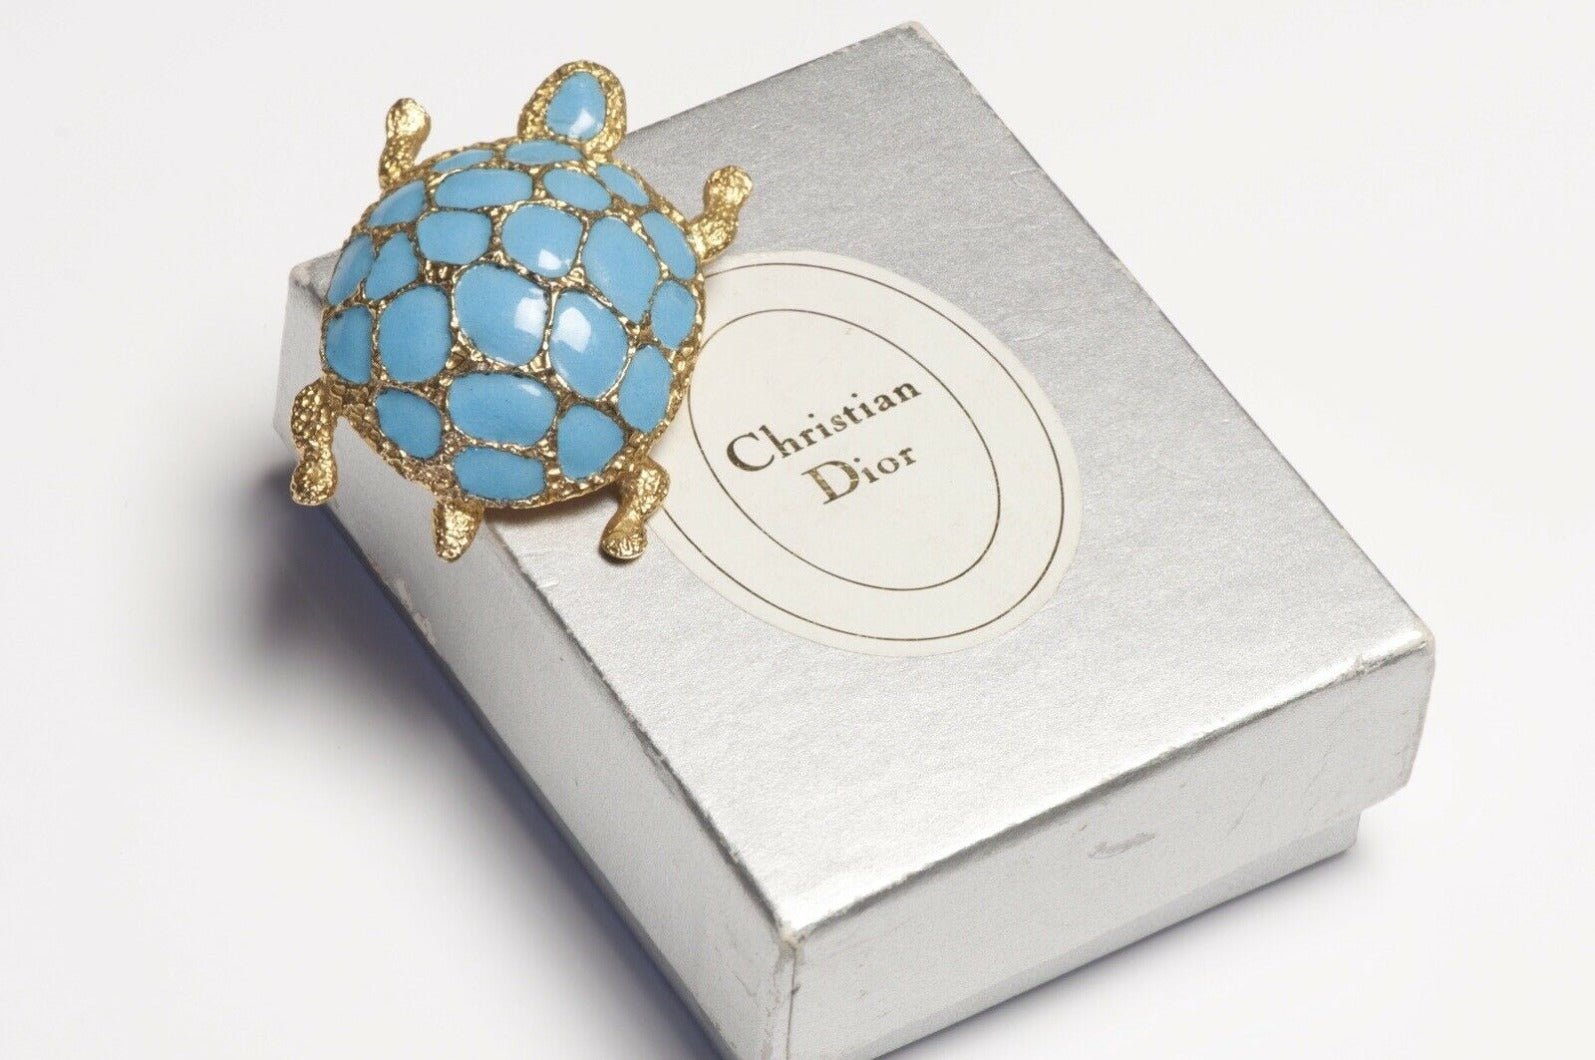 Christian Dior Henkel & Grosse Germany 1967 Blue Enamel Turtle Brooch